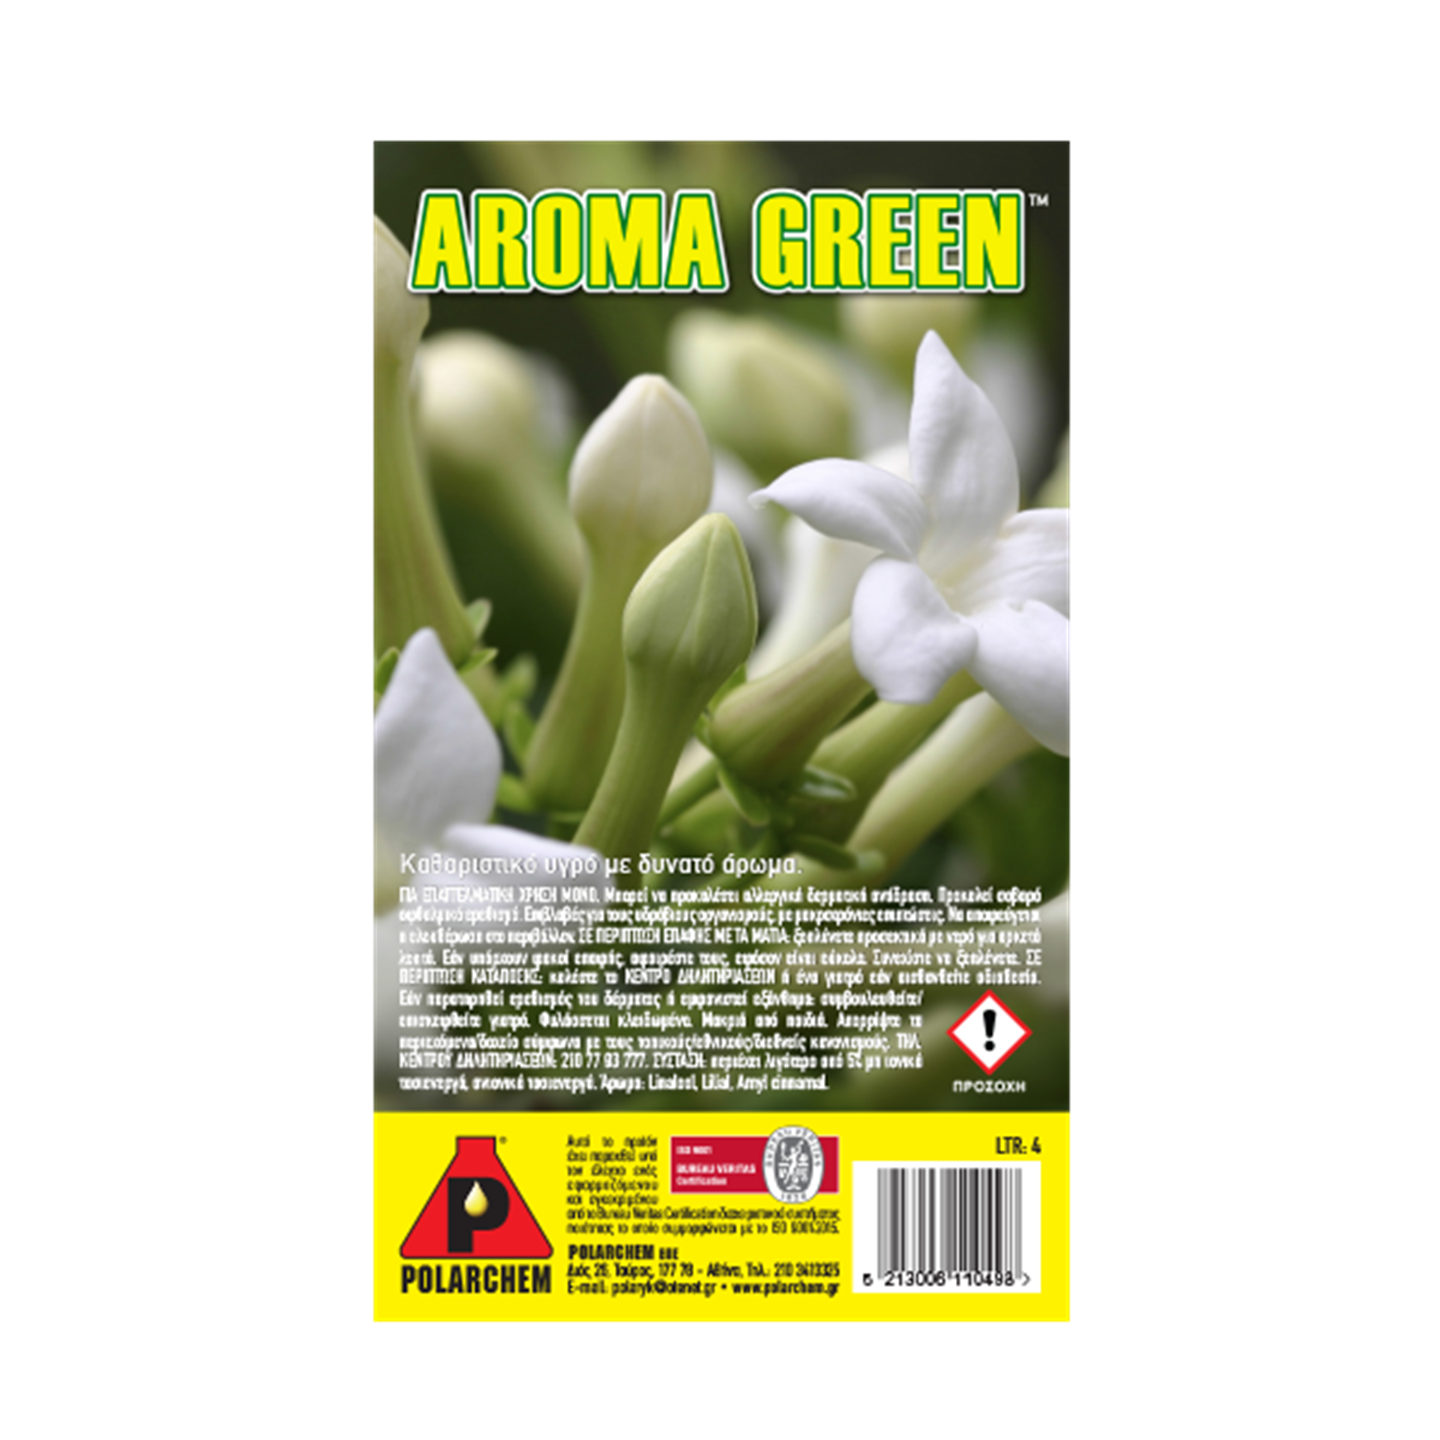 AROMA GREEN Air Freshener